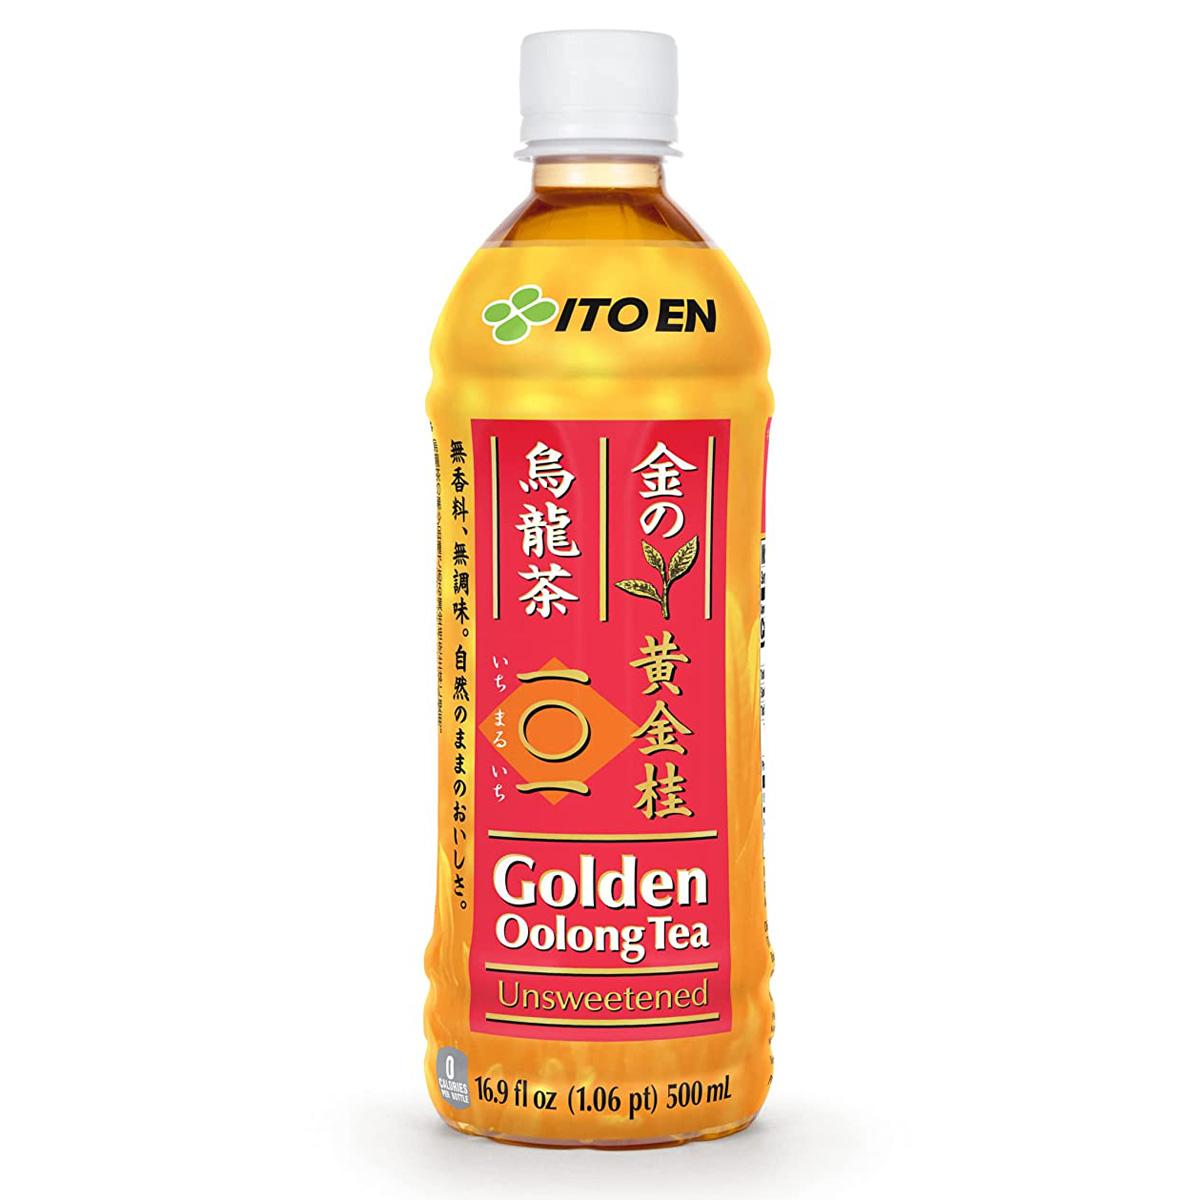 12 Ito En Tea Unsweetened Golden Oolong Tea for $12.53 Shipped